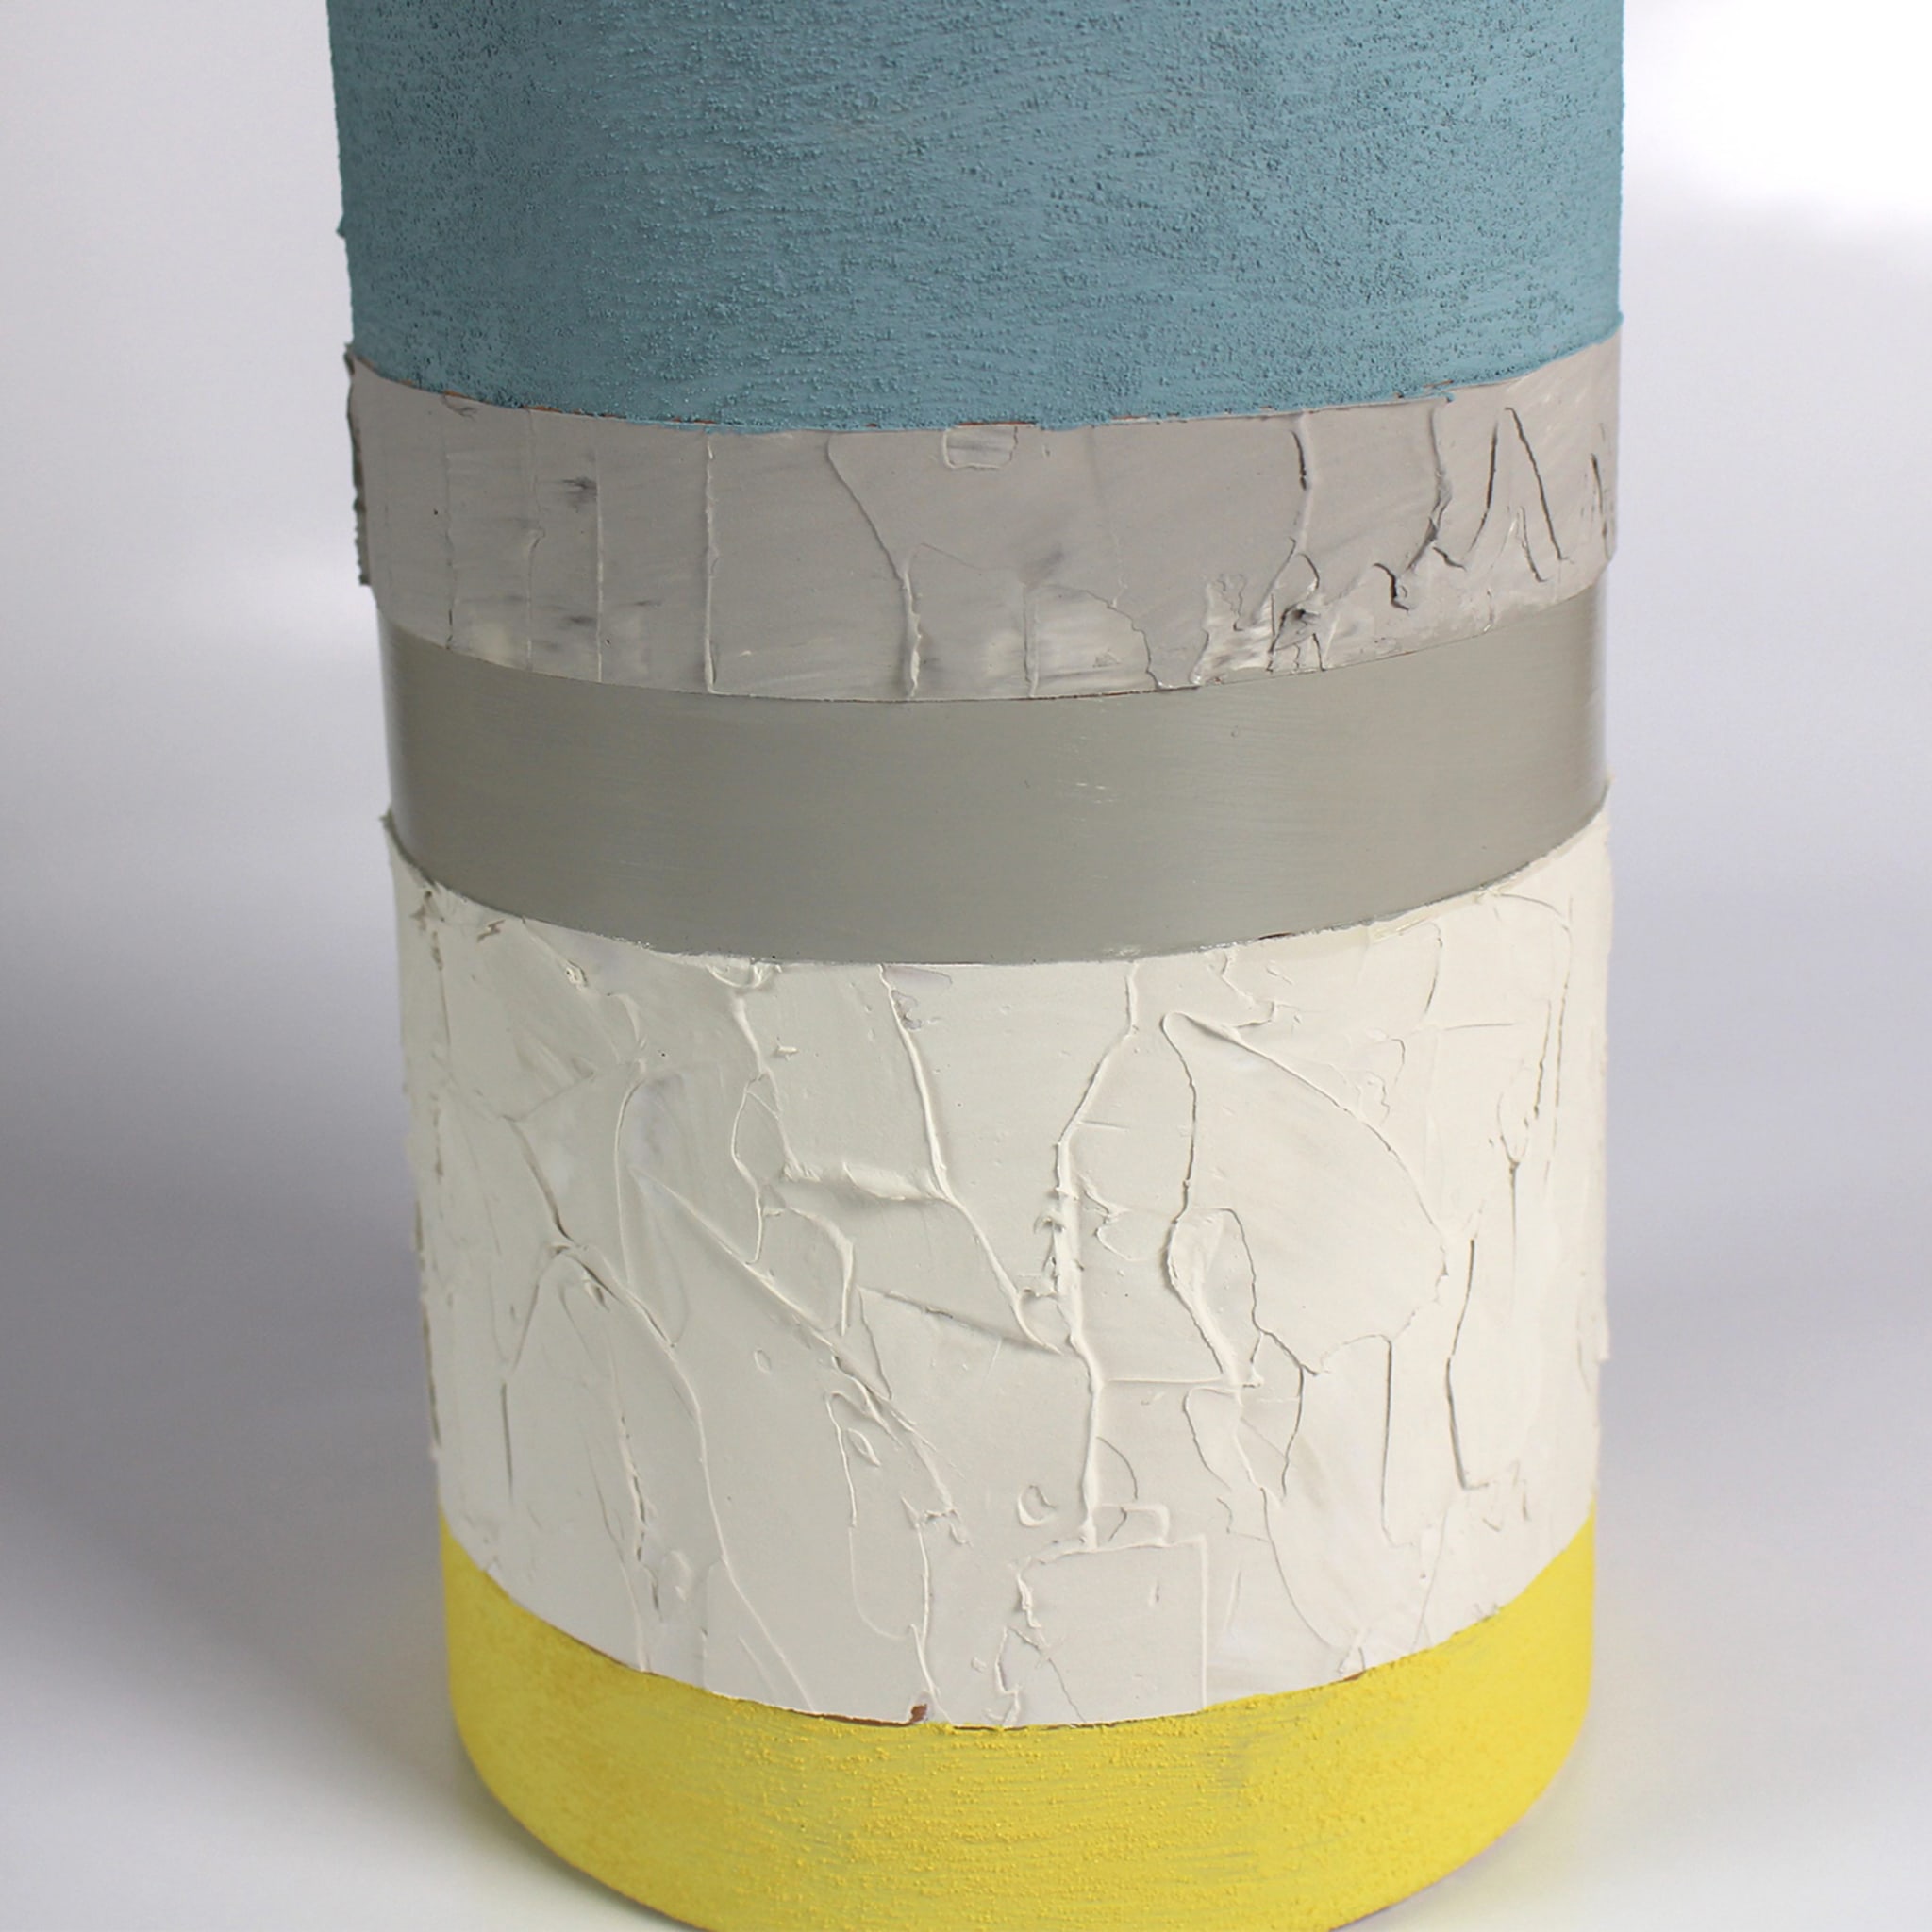 Azure, Gray, Yellow Vase 25 by Mascia Meccani - Alternative view 3